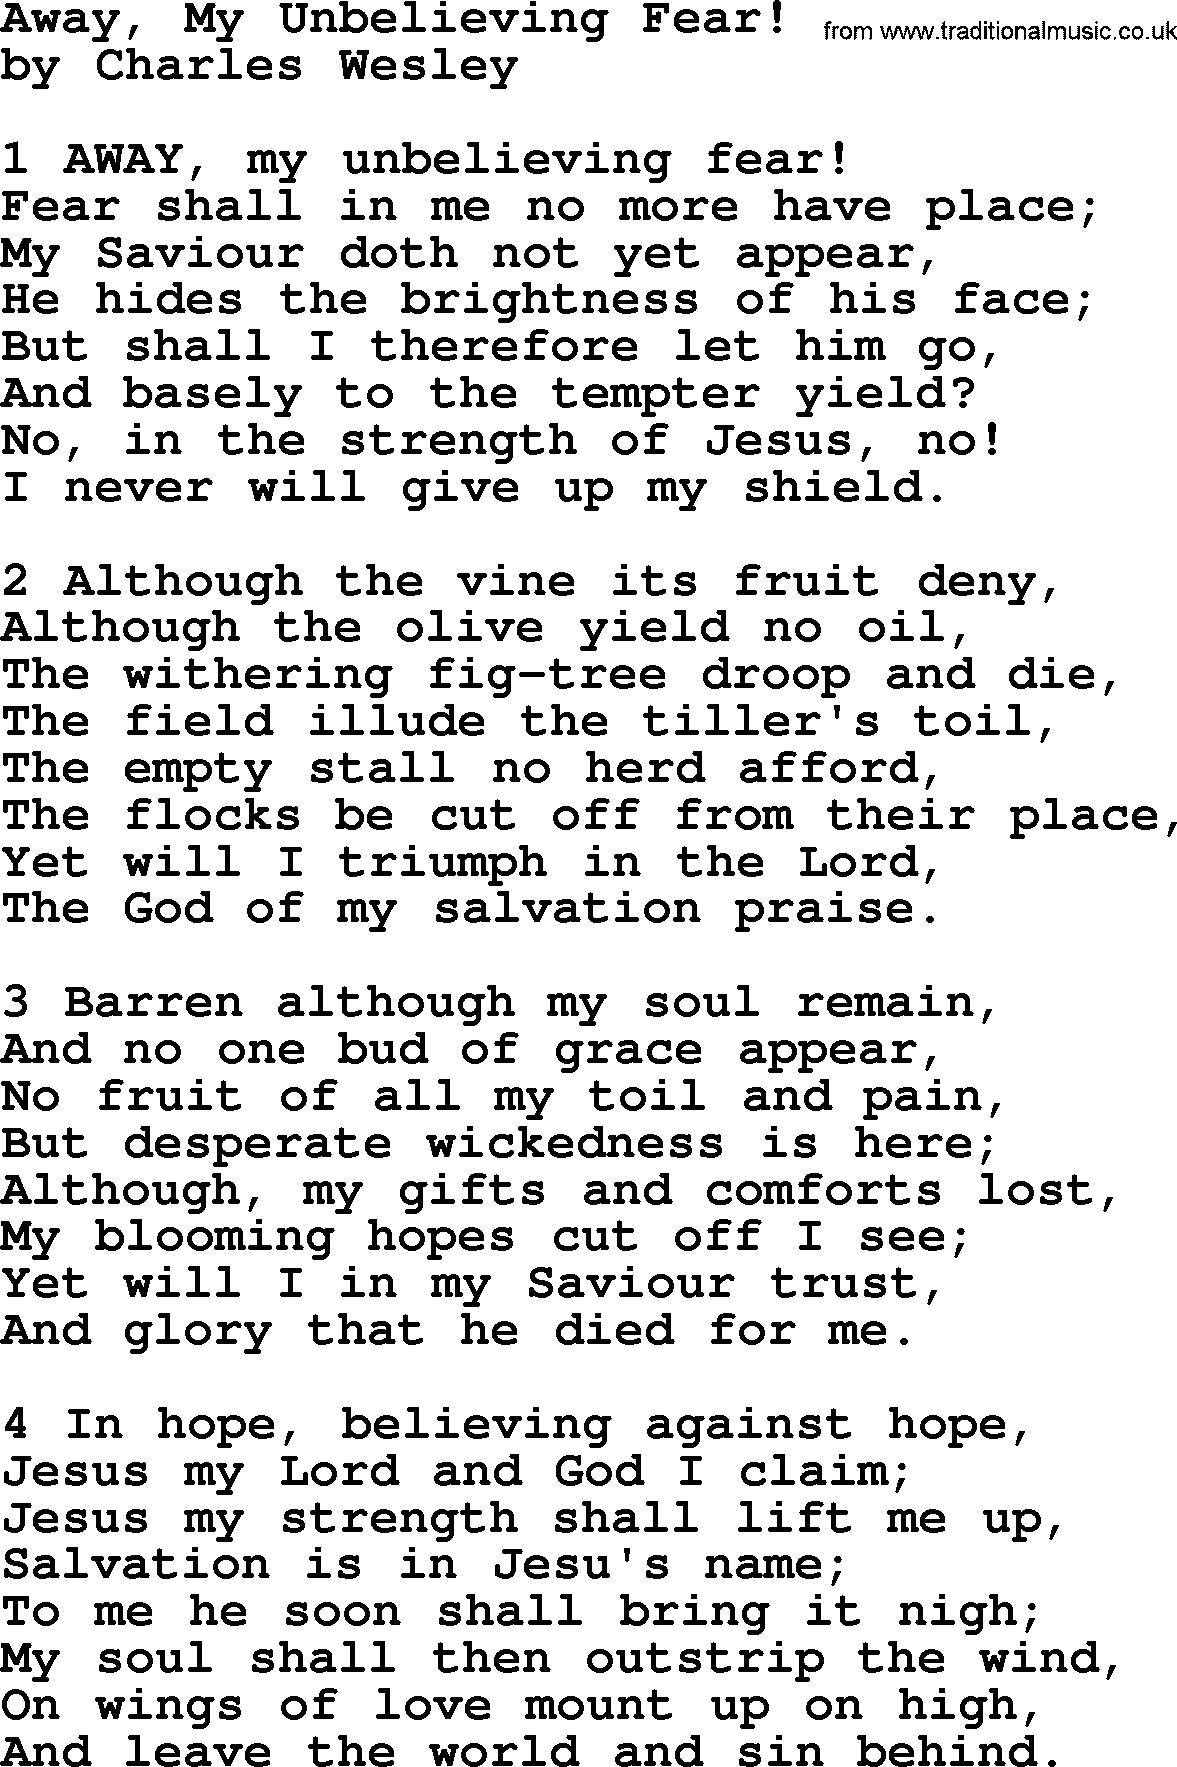 Charles Wesley hymn: Away, My Unbelieving Fear!, lyrics